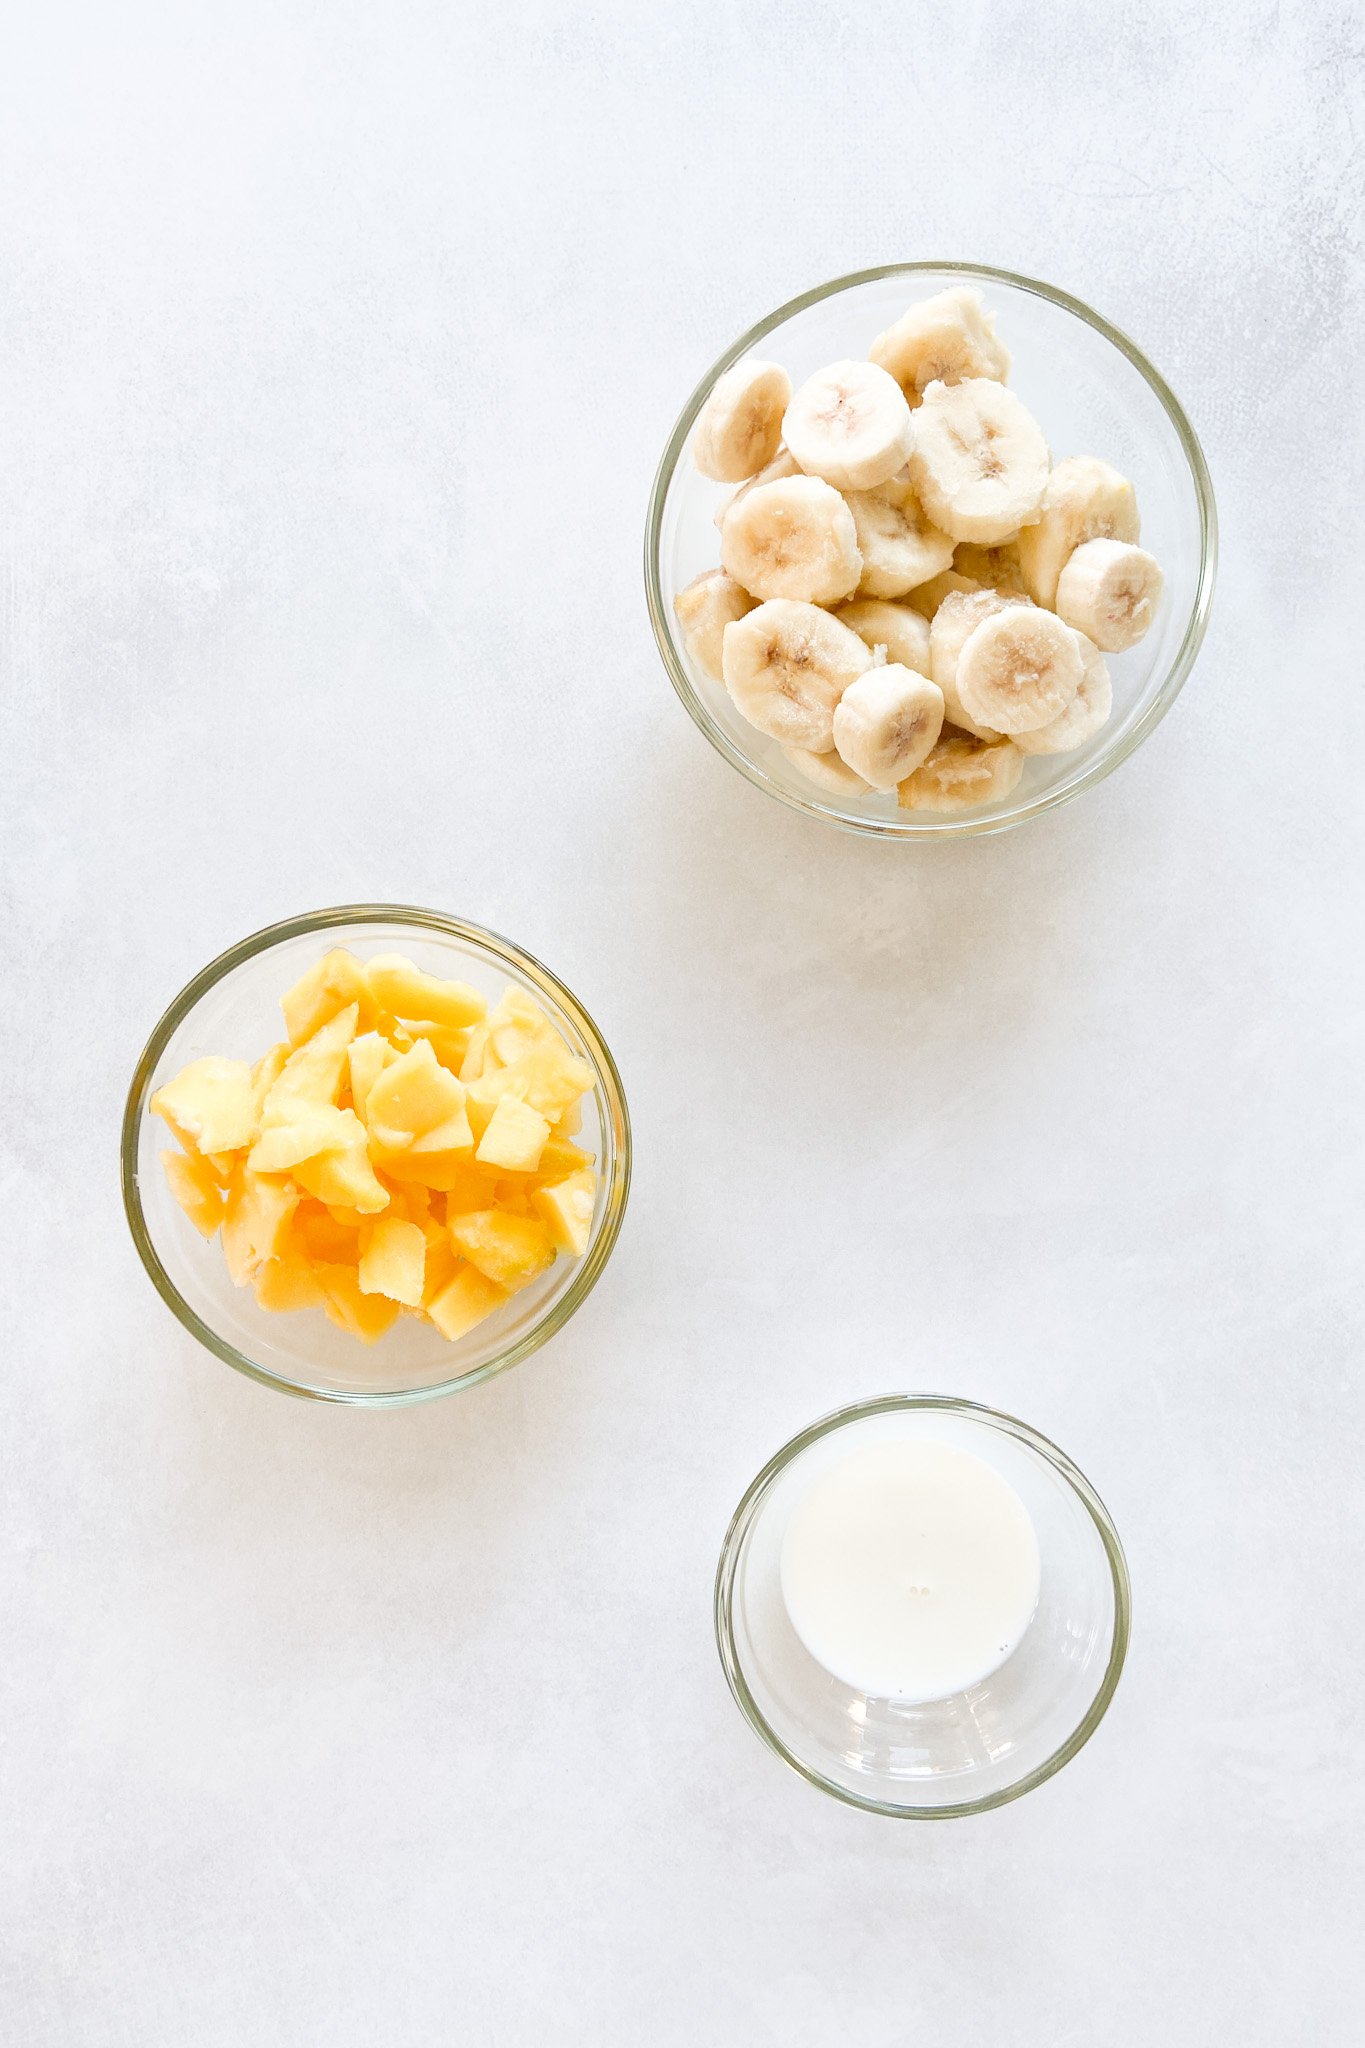 Ingredients to make mango banana nice cream. See recipe card for detailed ingredient quantities.